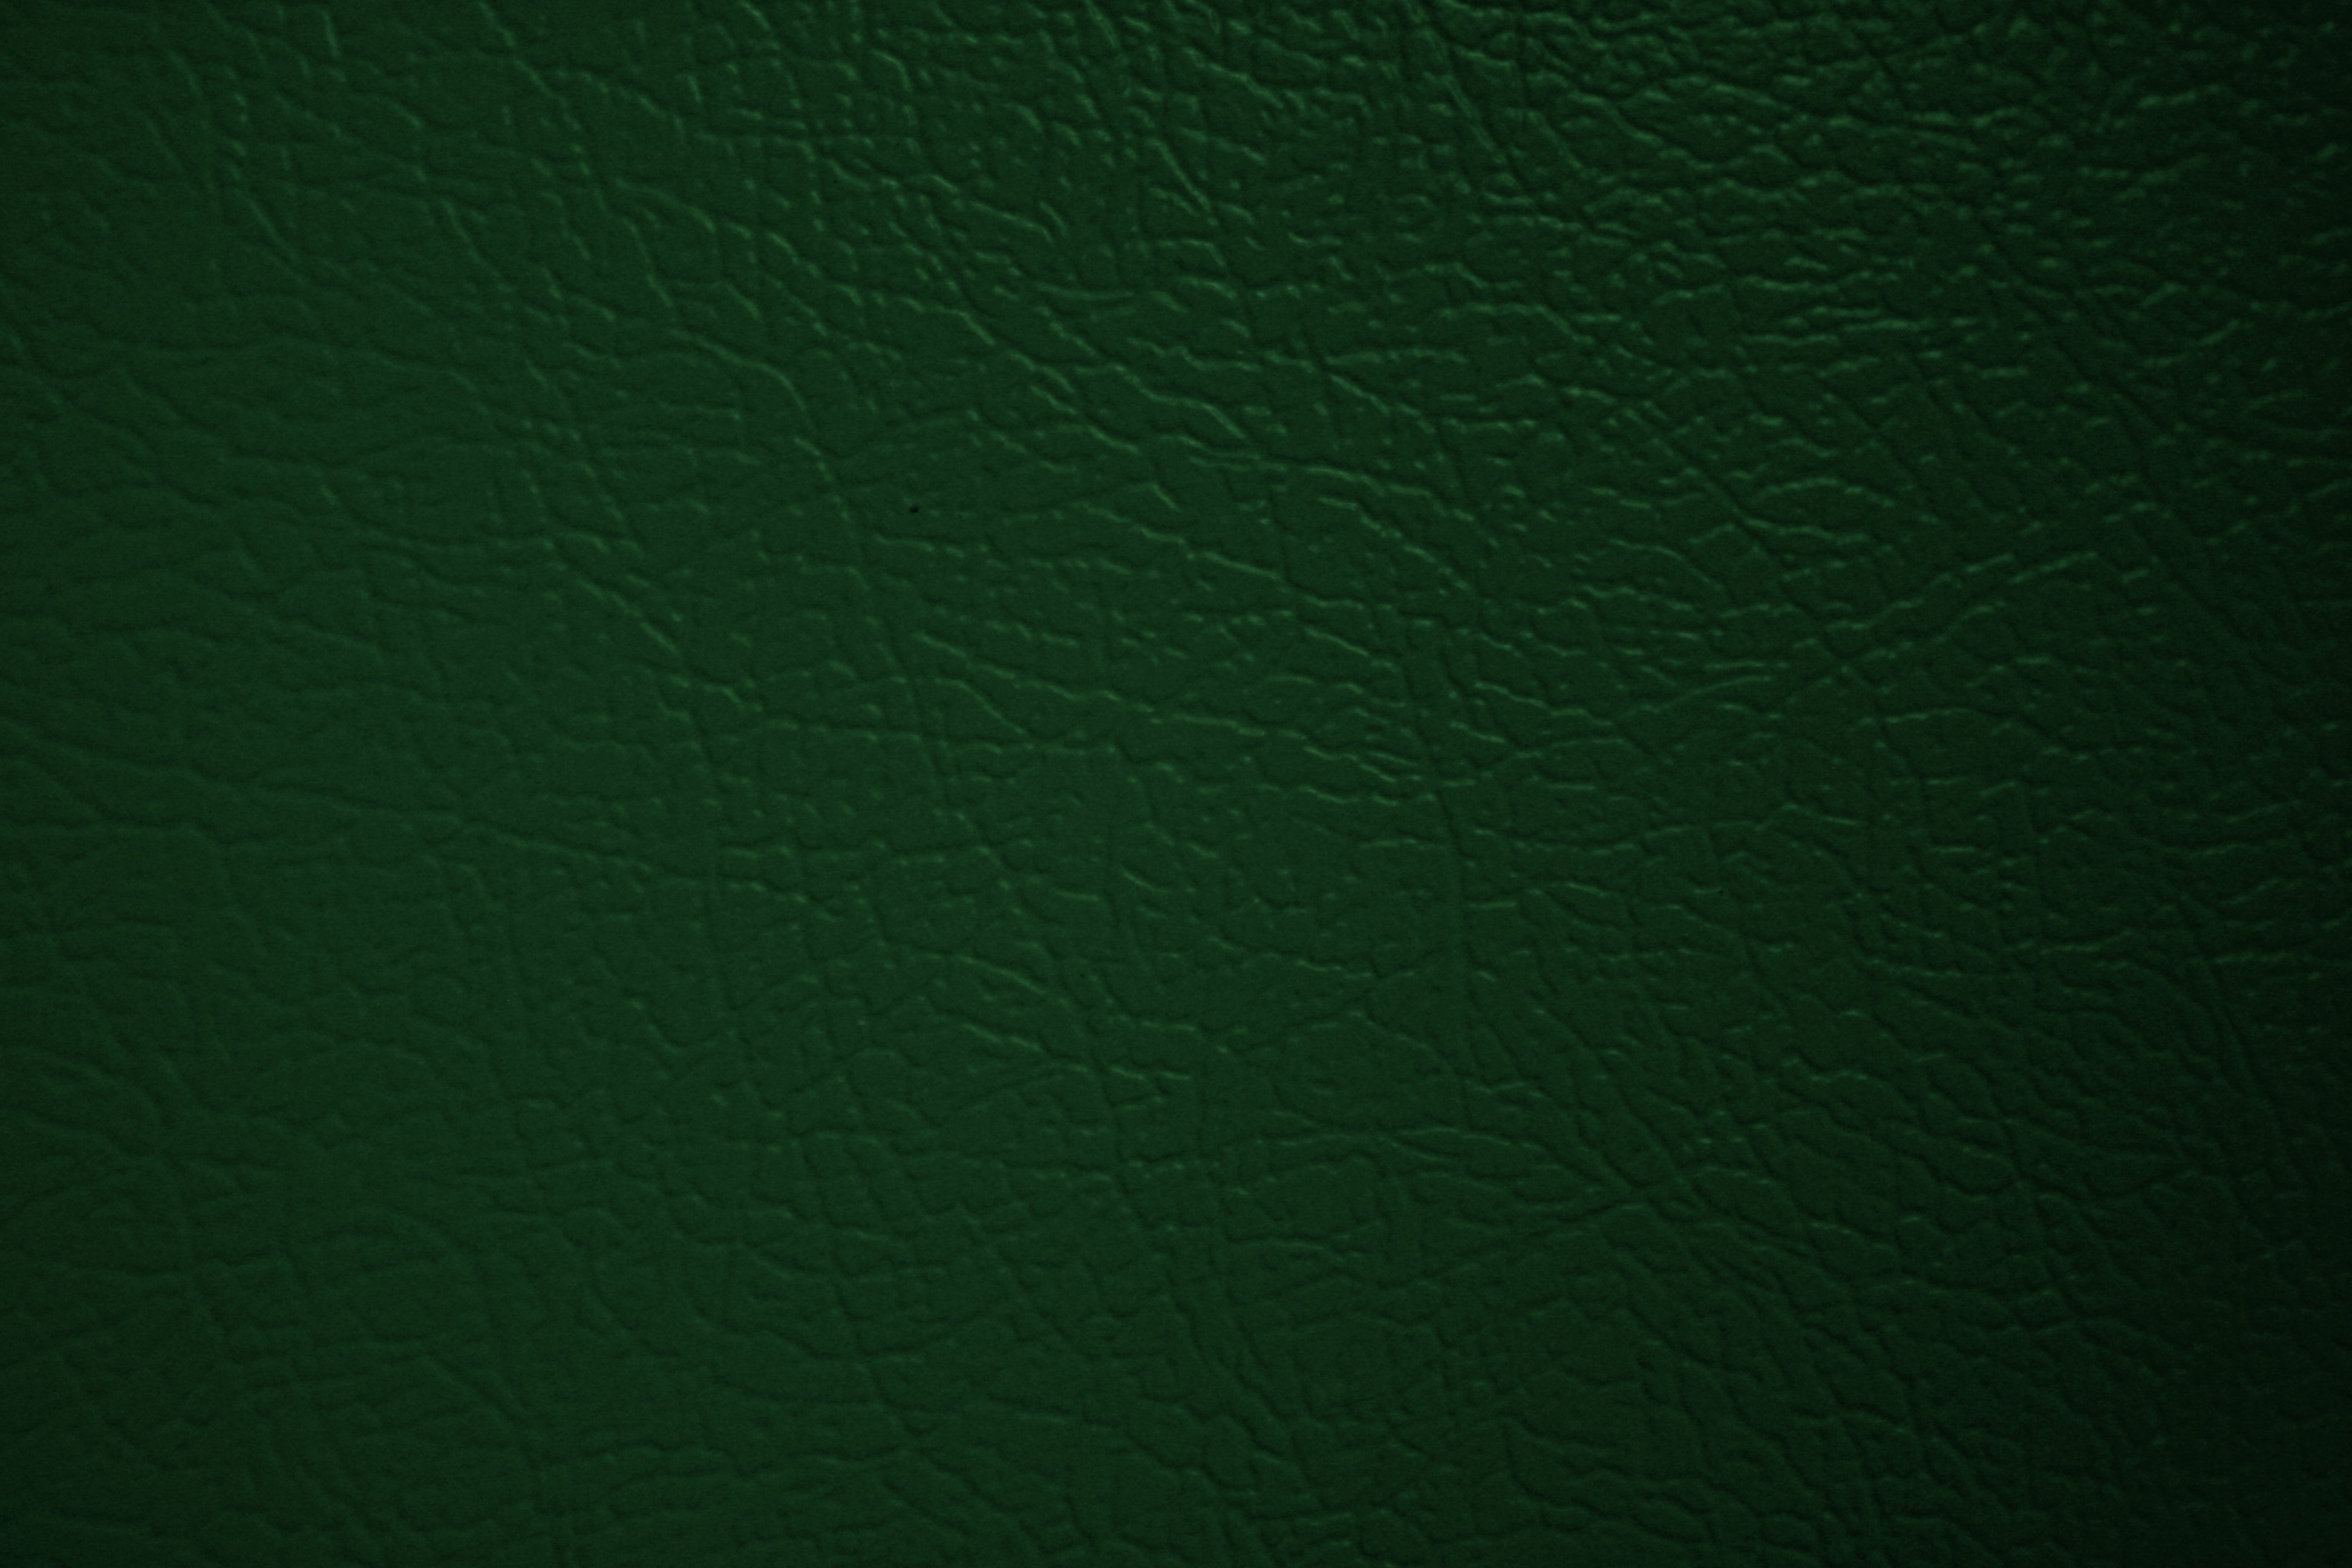 dark green texture backgrounds wallpaper cave on dark green texture background